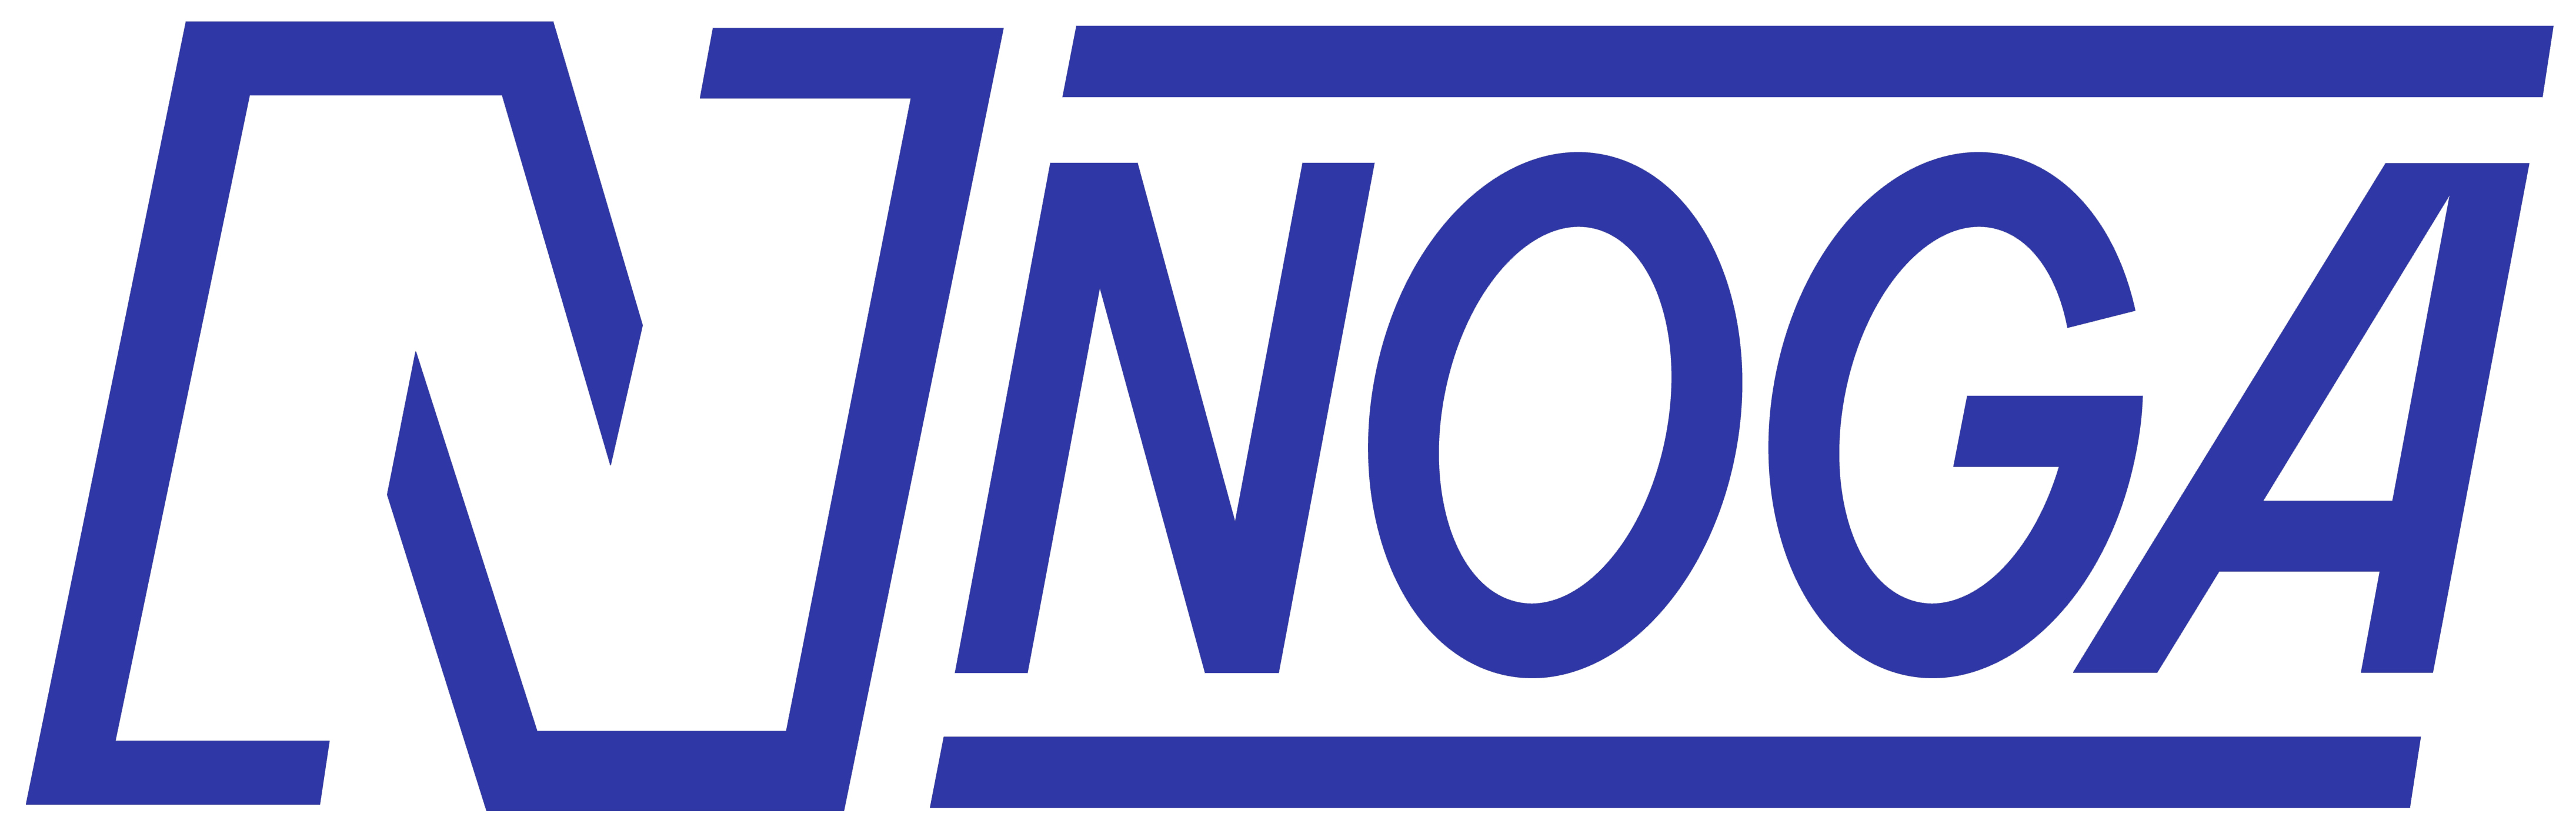 Noga Logo